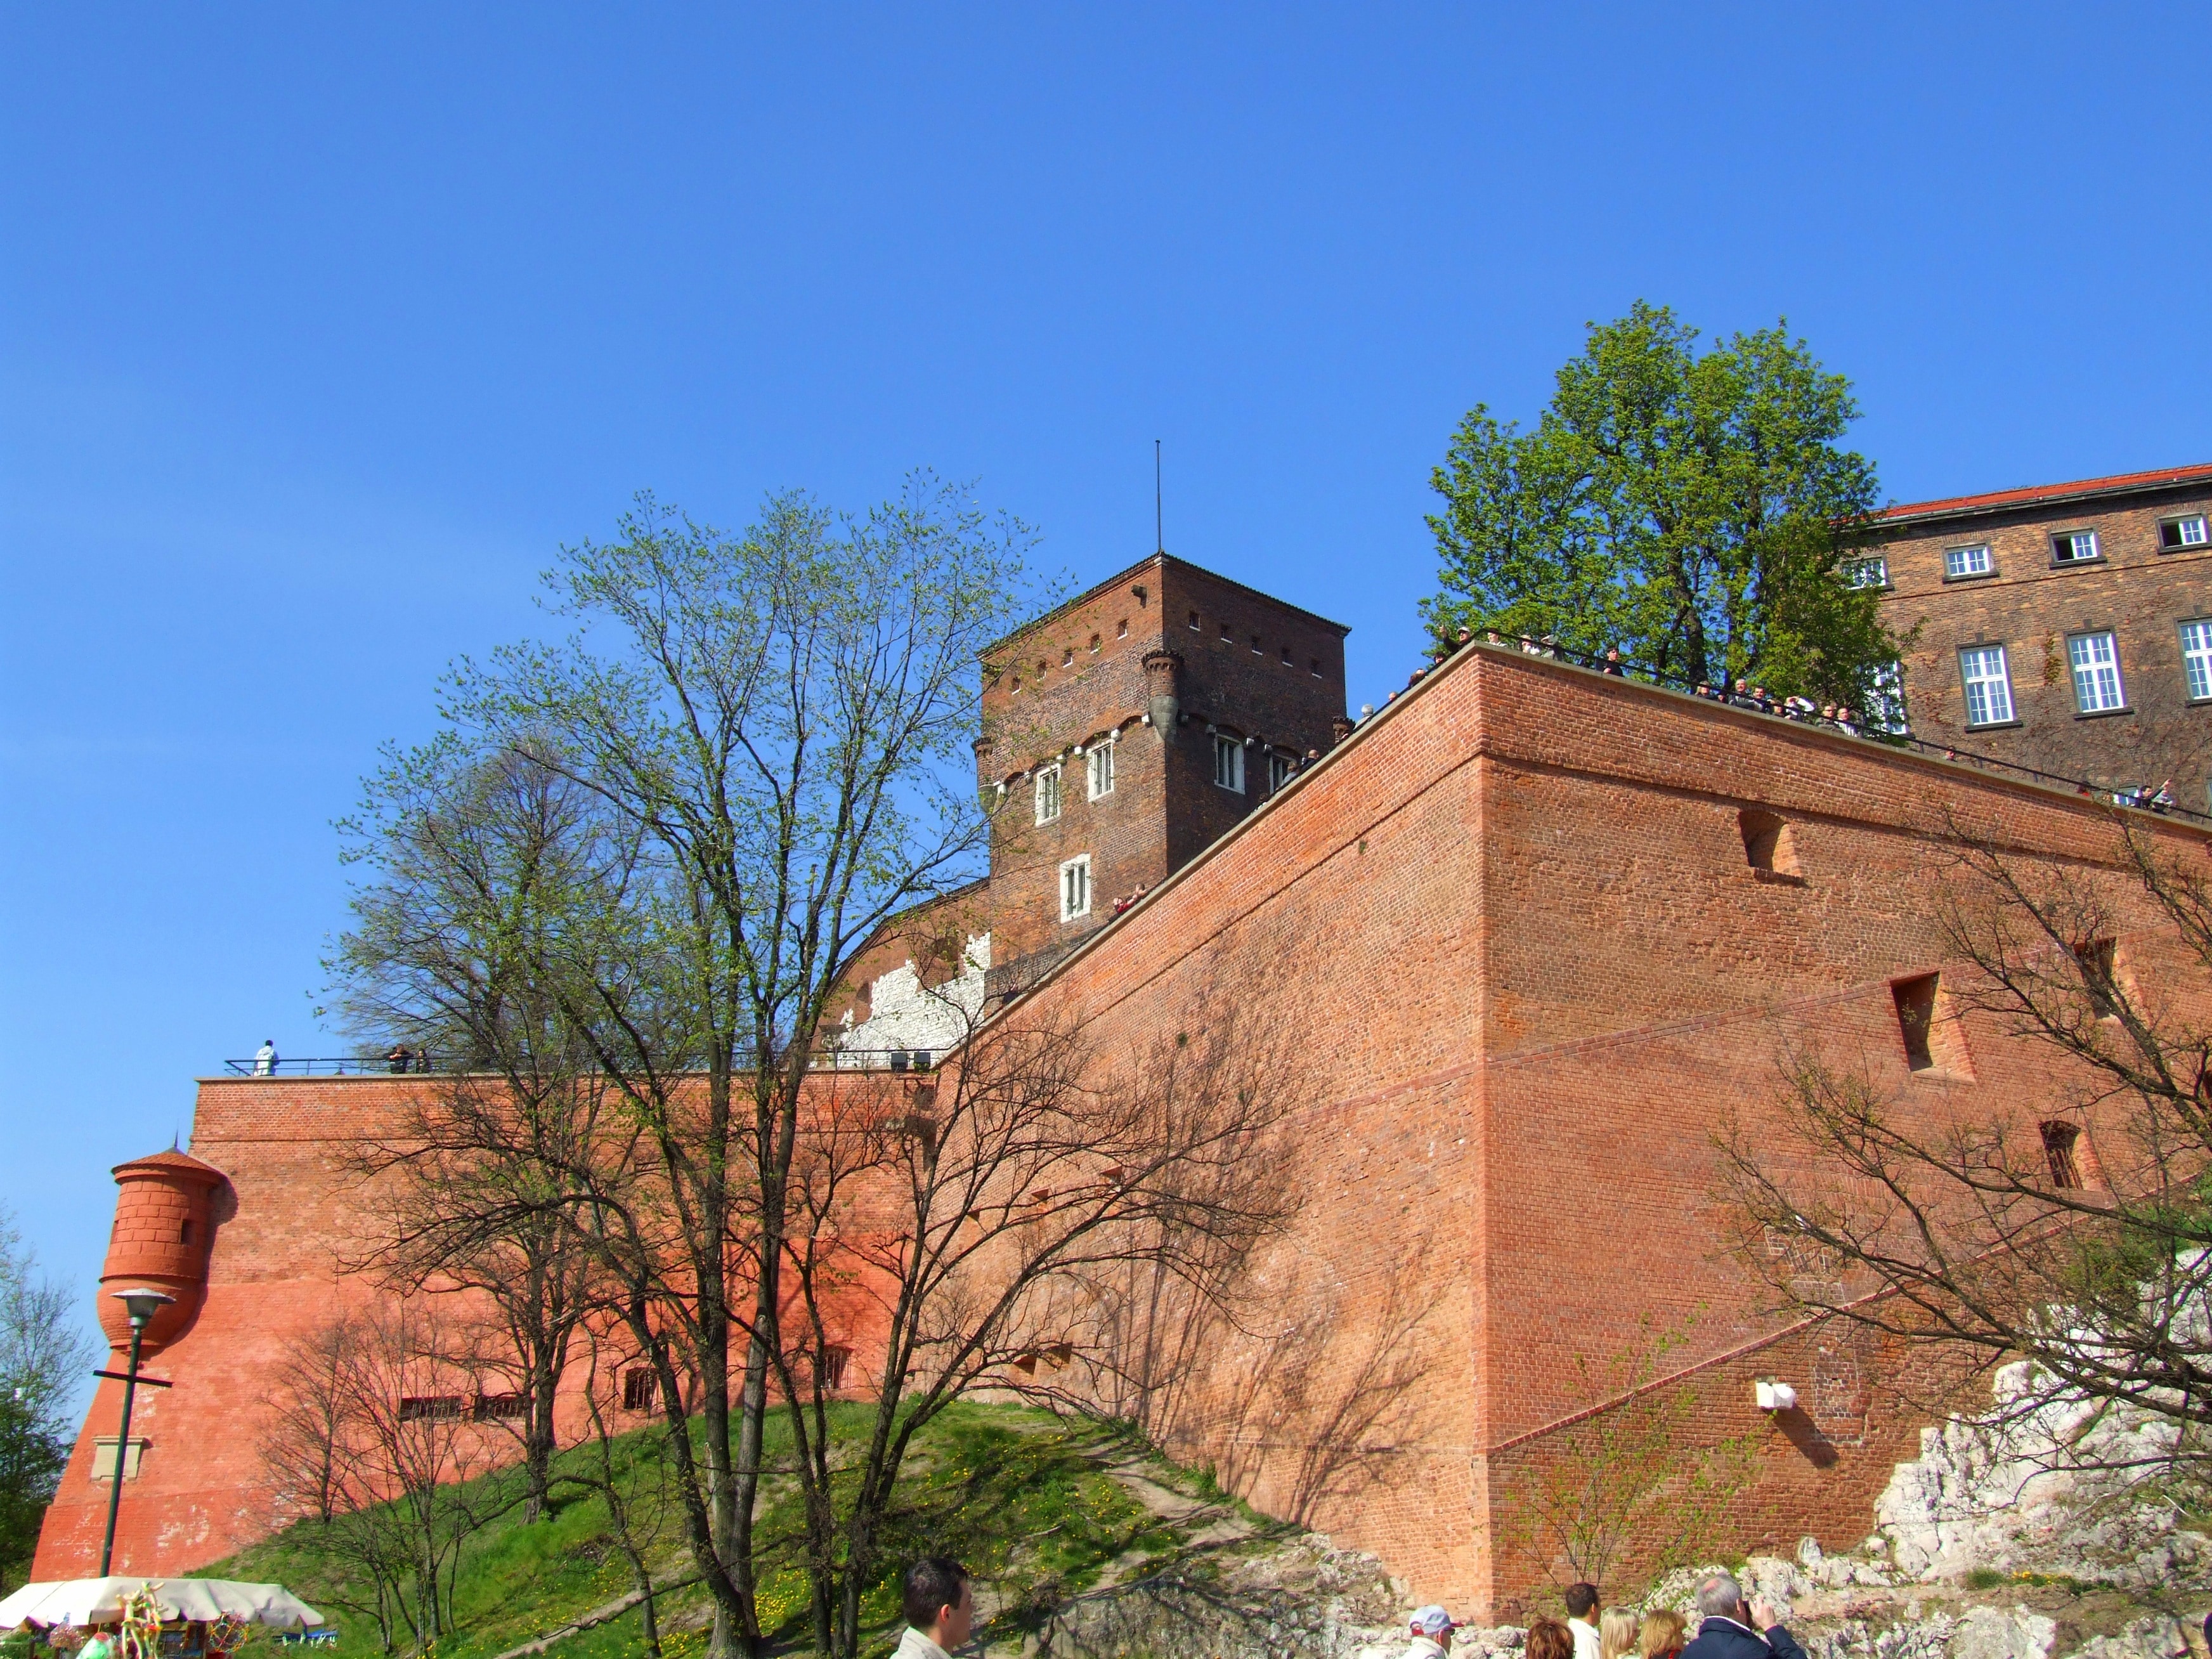 Kraków, Wawel, Old, Poland, Castle, , 